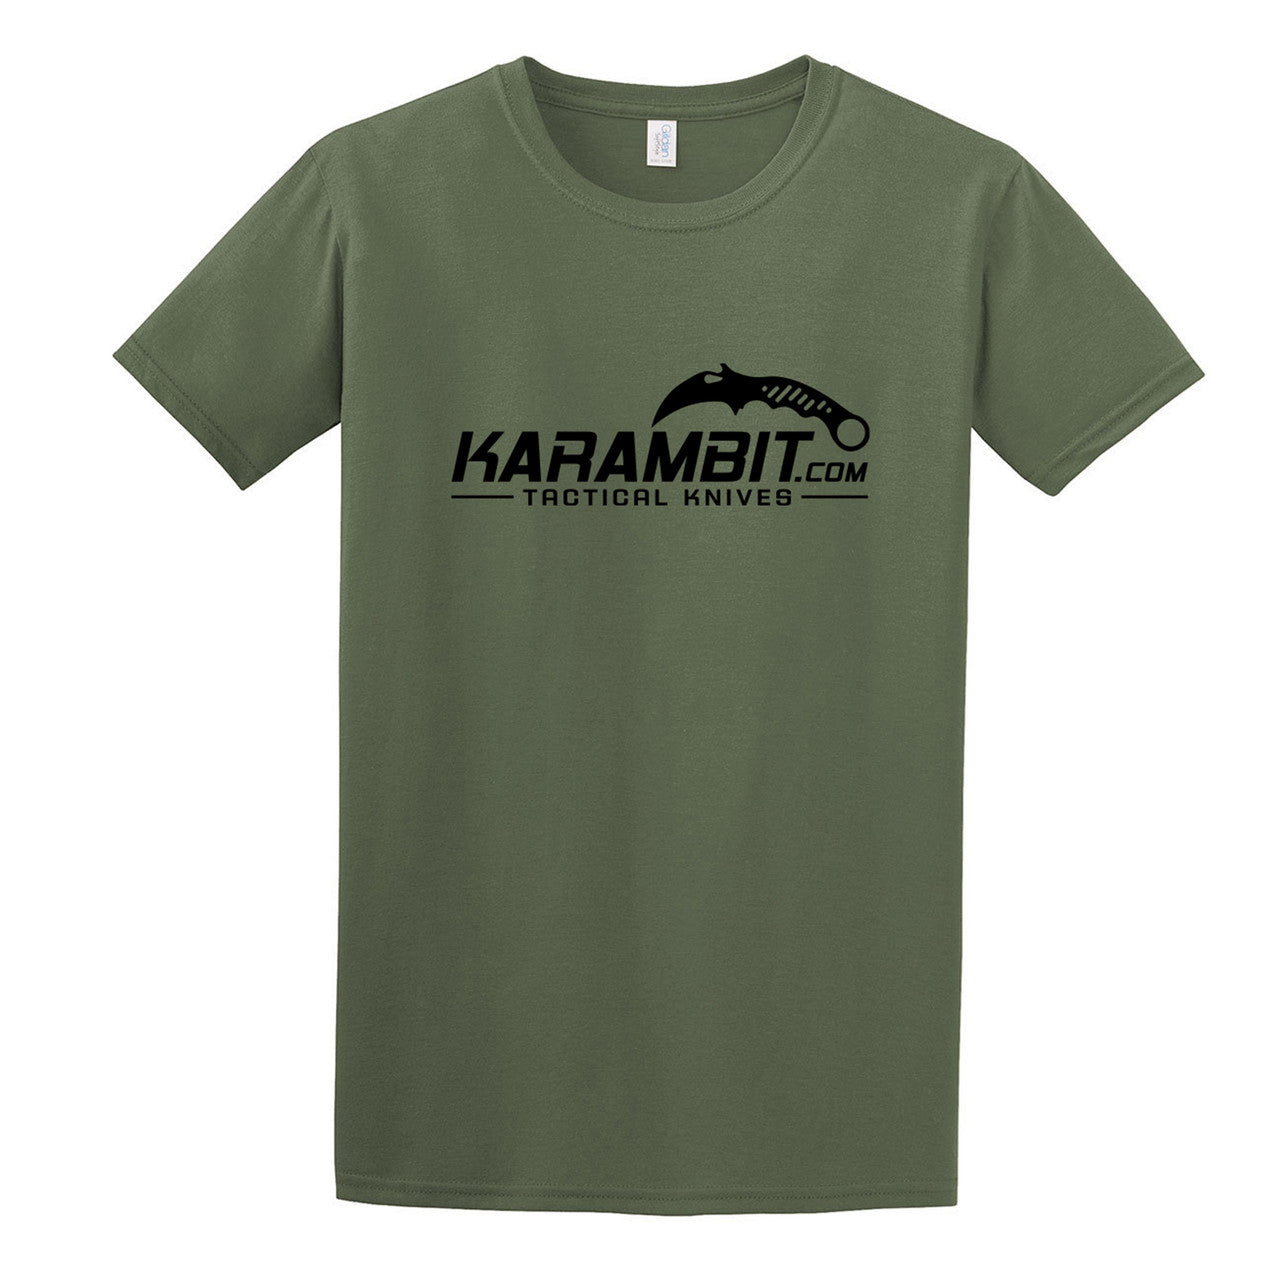 Karambit.com Softstyle® T-Shirt, Color: Military Green, front of shirt w/ Karambit.com black logo. (KbitlogoSoftstyleTee-MilGrn)